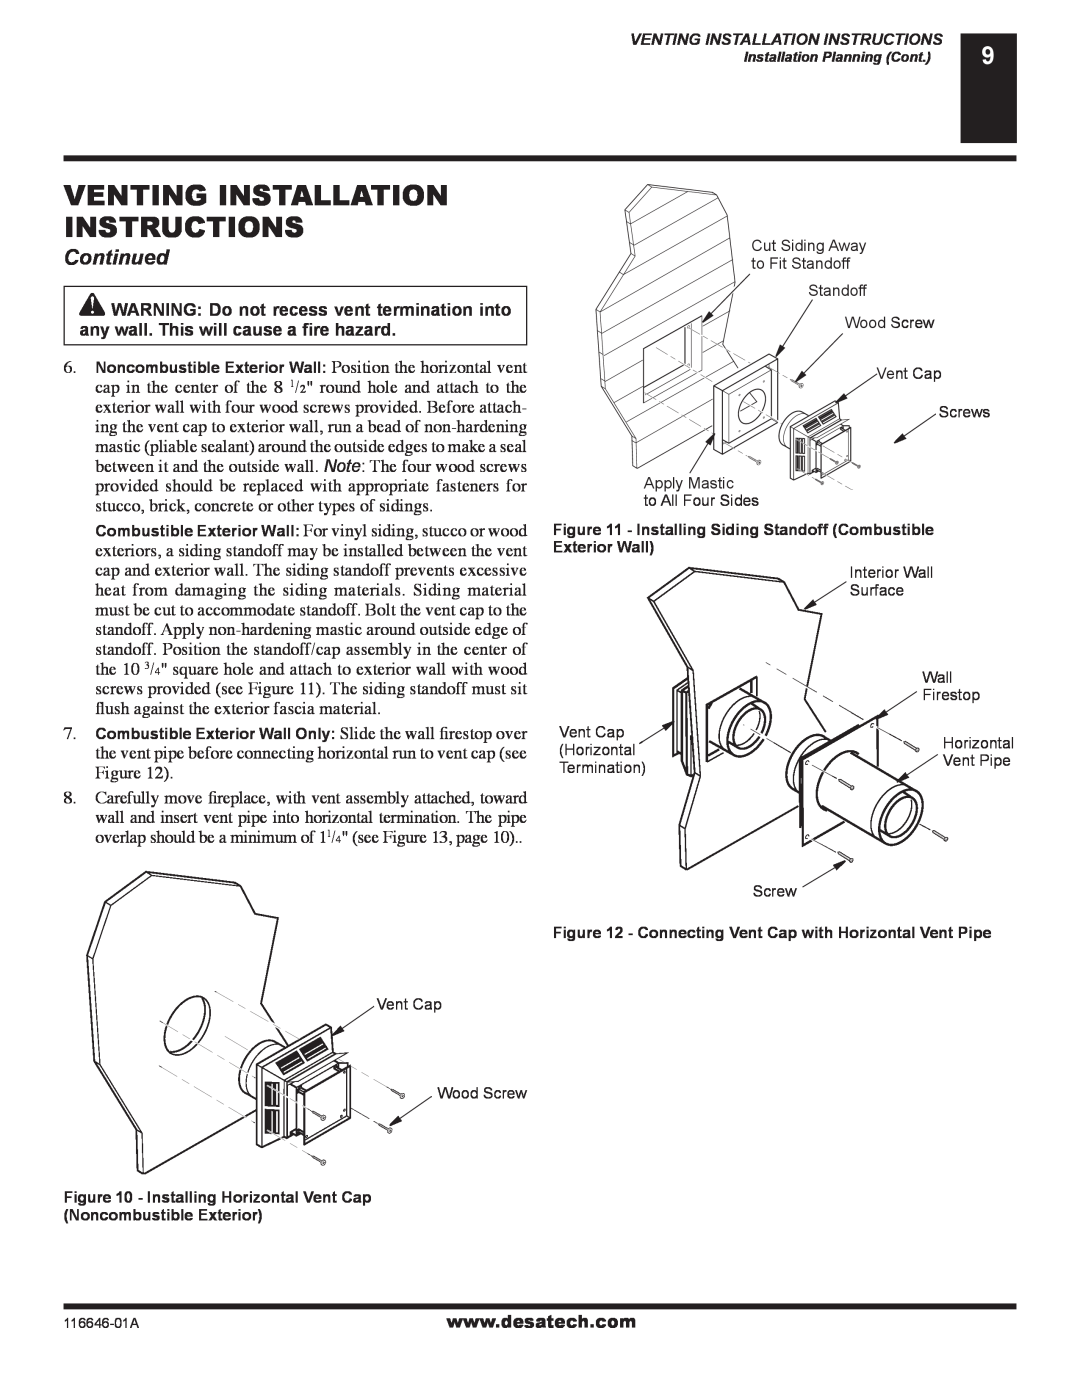 Desa (V)T32N-A Series Venting Installation Instructions, Continued, Exterior Wall, Installing Horizontal Vent Cap 